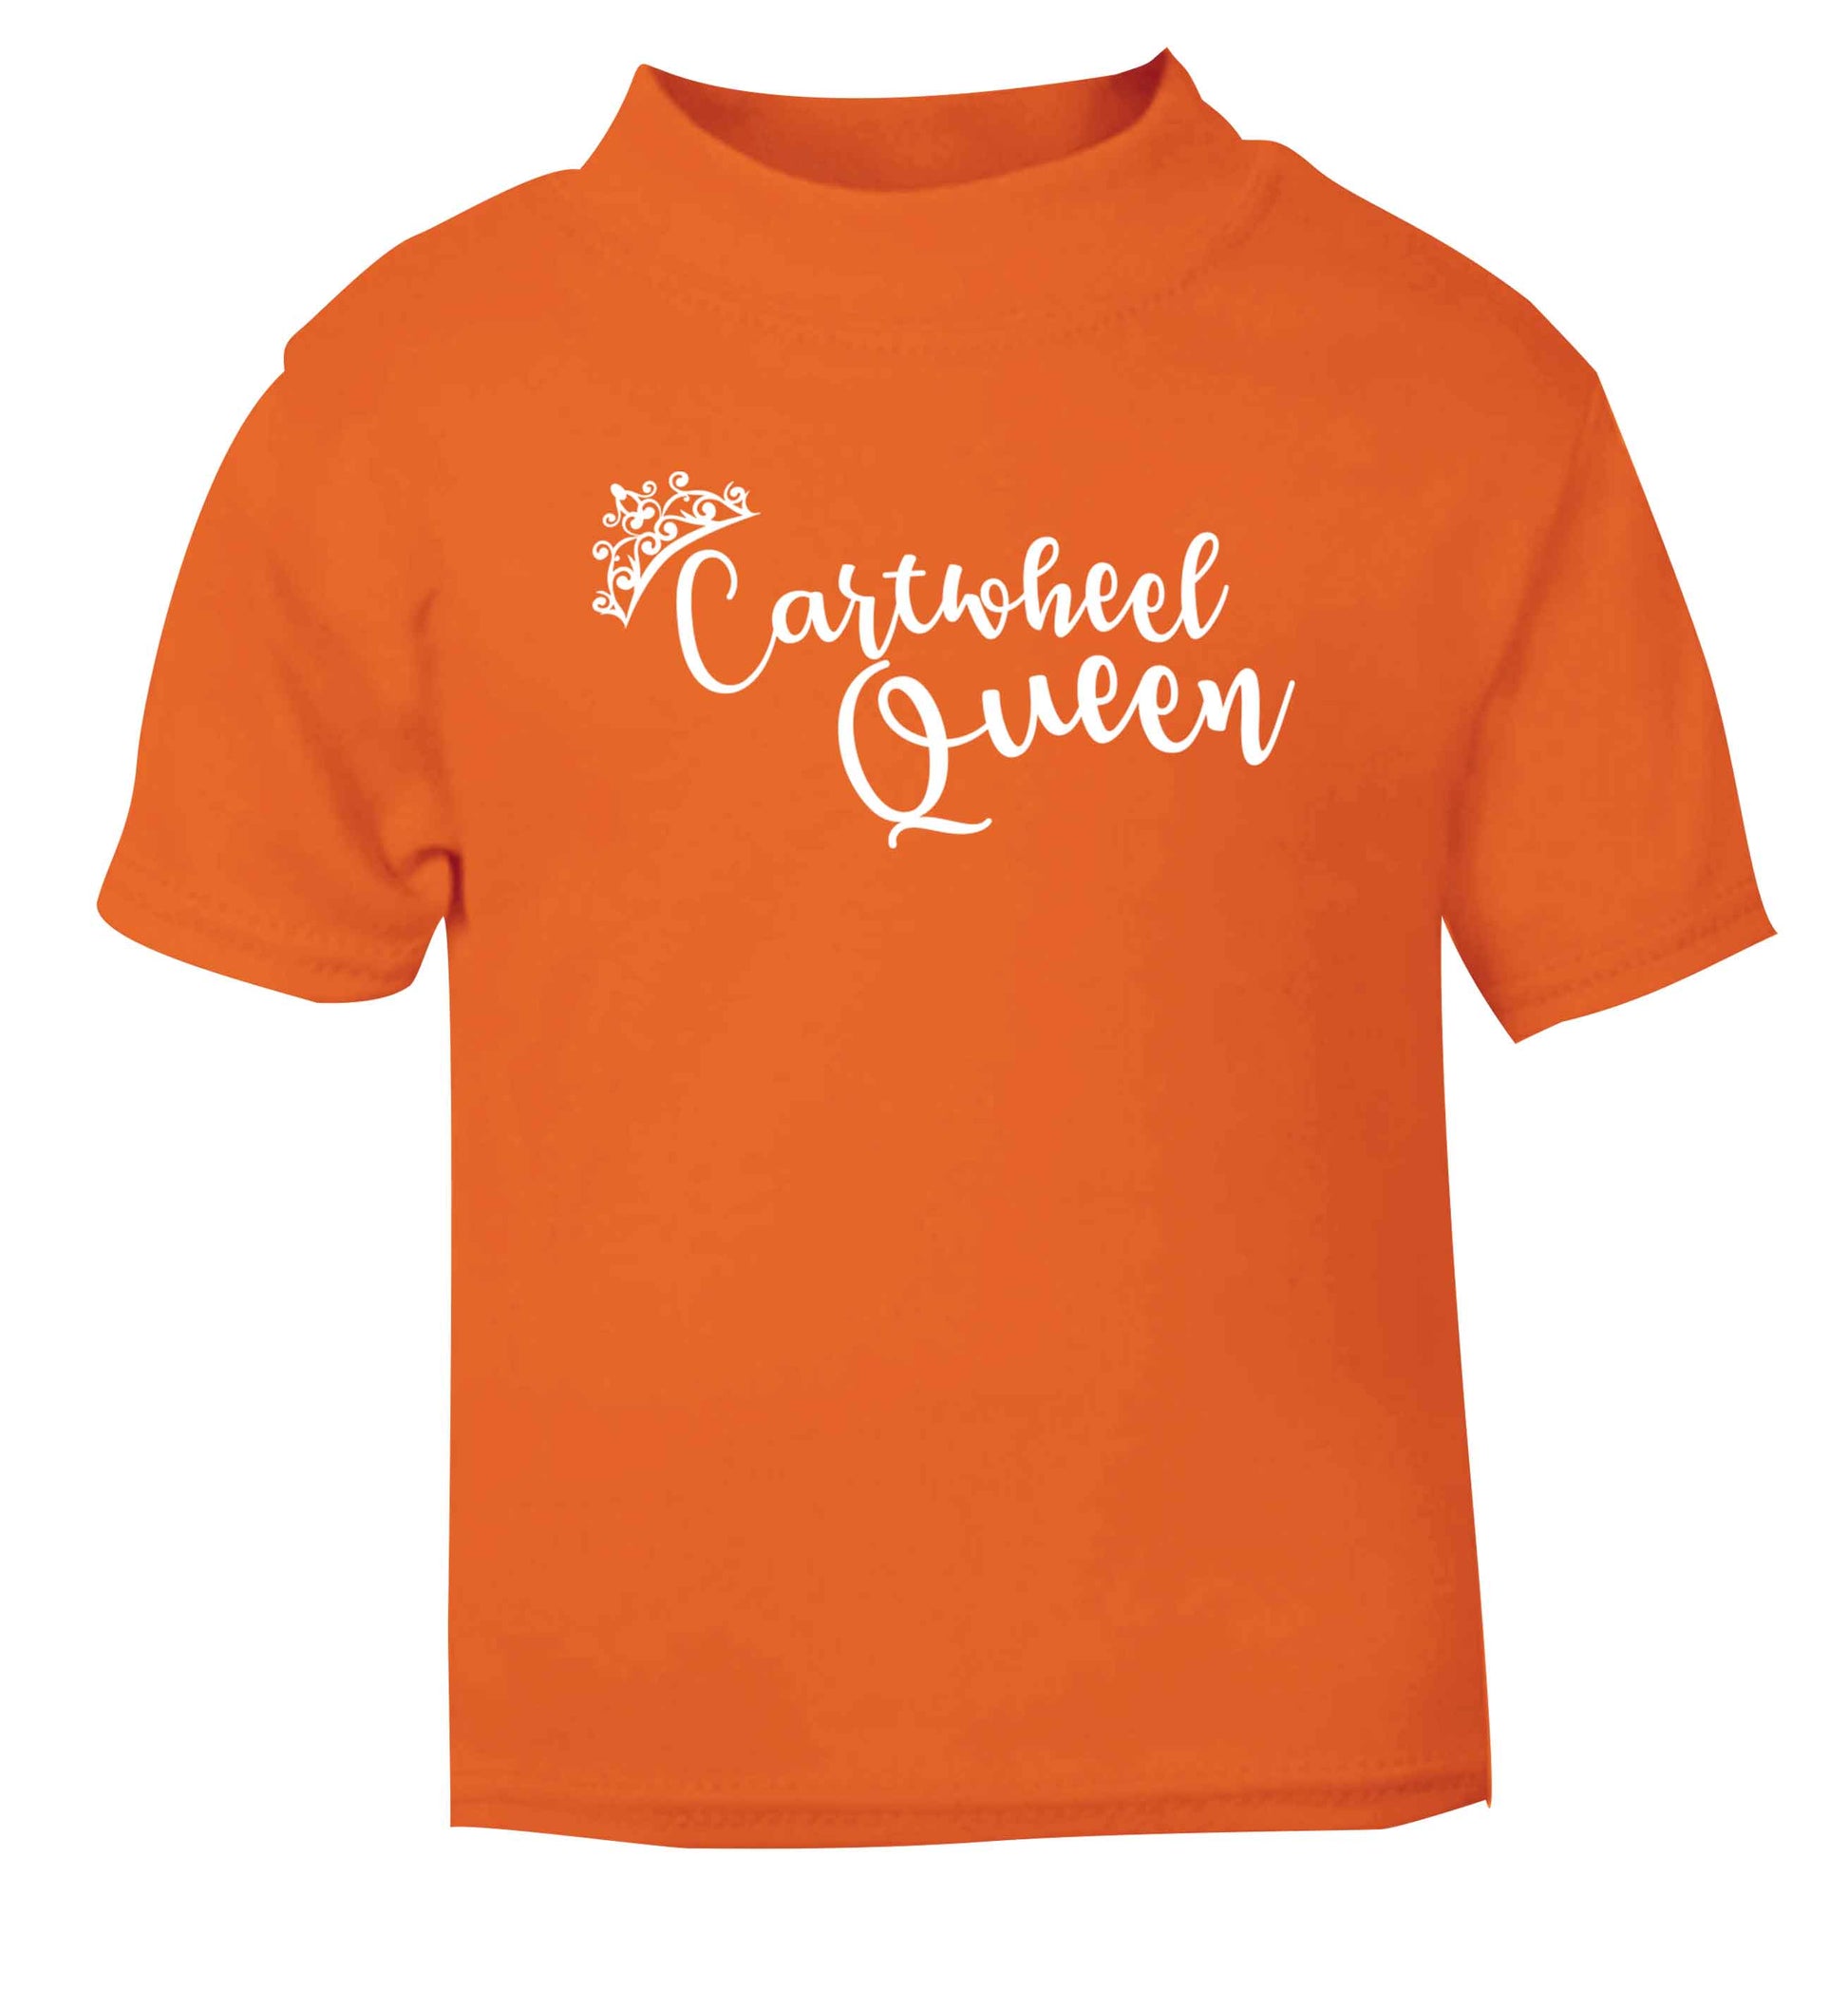 Cartwheel queen orange Baby Toddler Tshirt 2 Years